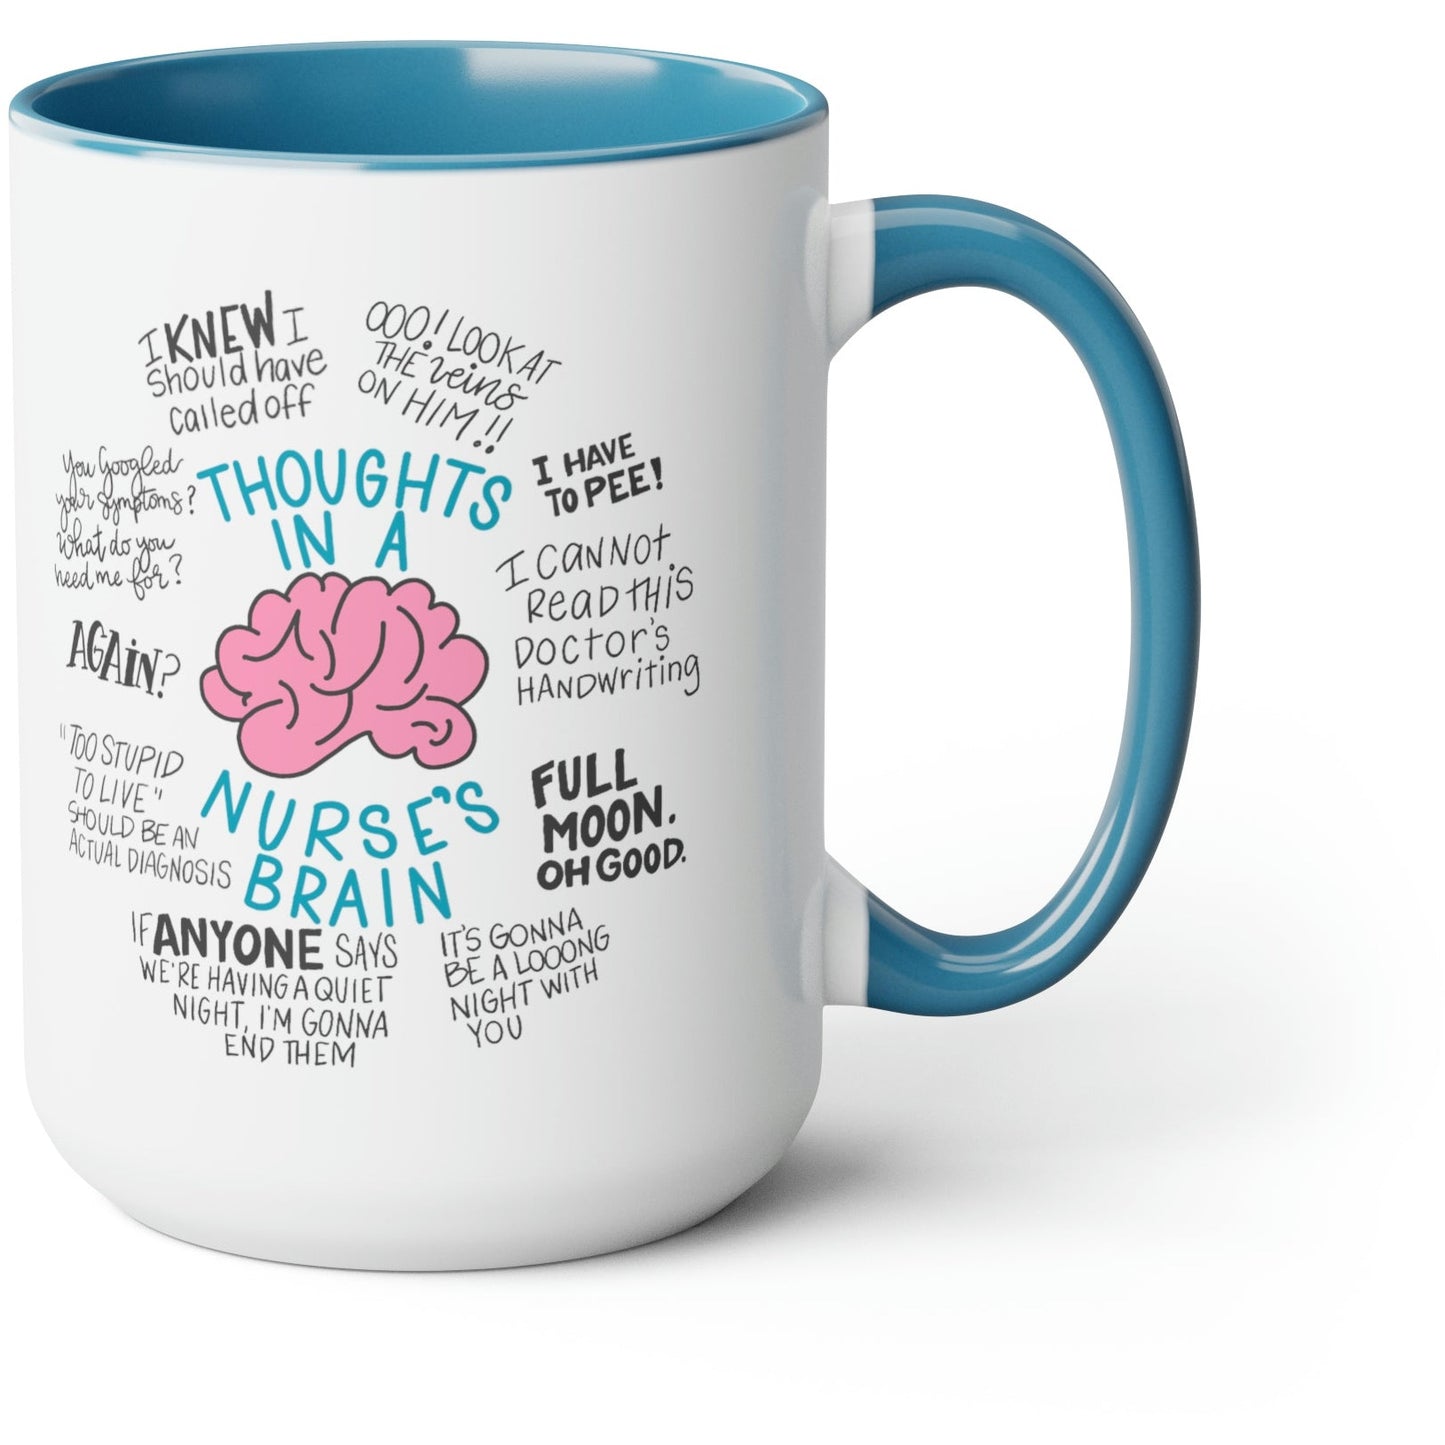 Nurse Thoughts-Nurse Brain Accent Coffee Mug, 11oz (Blue and Black Accent)